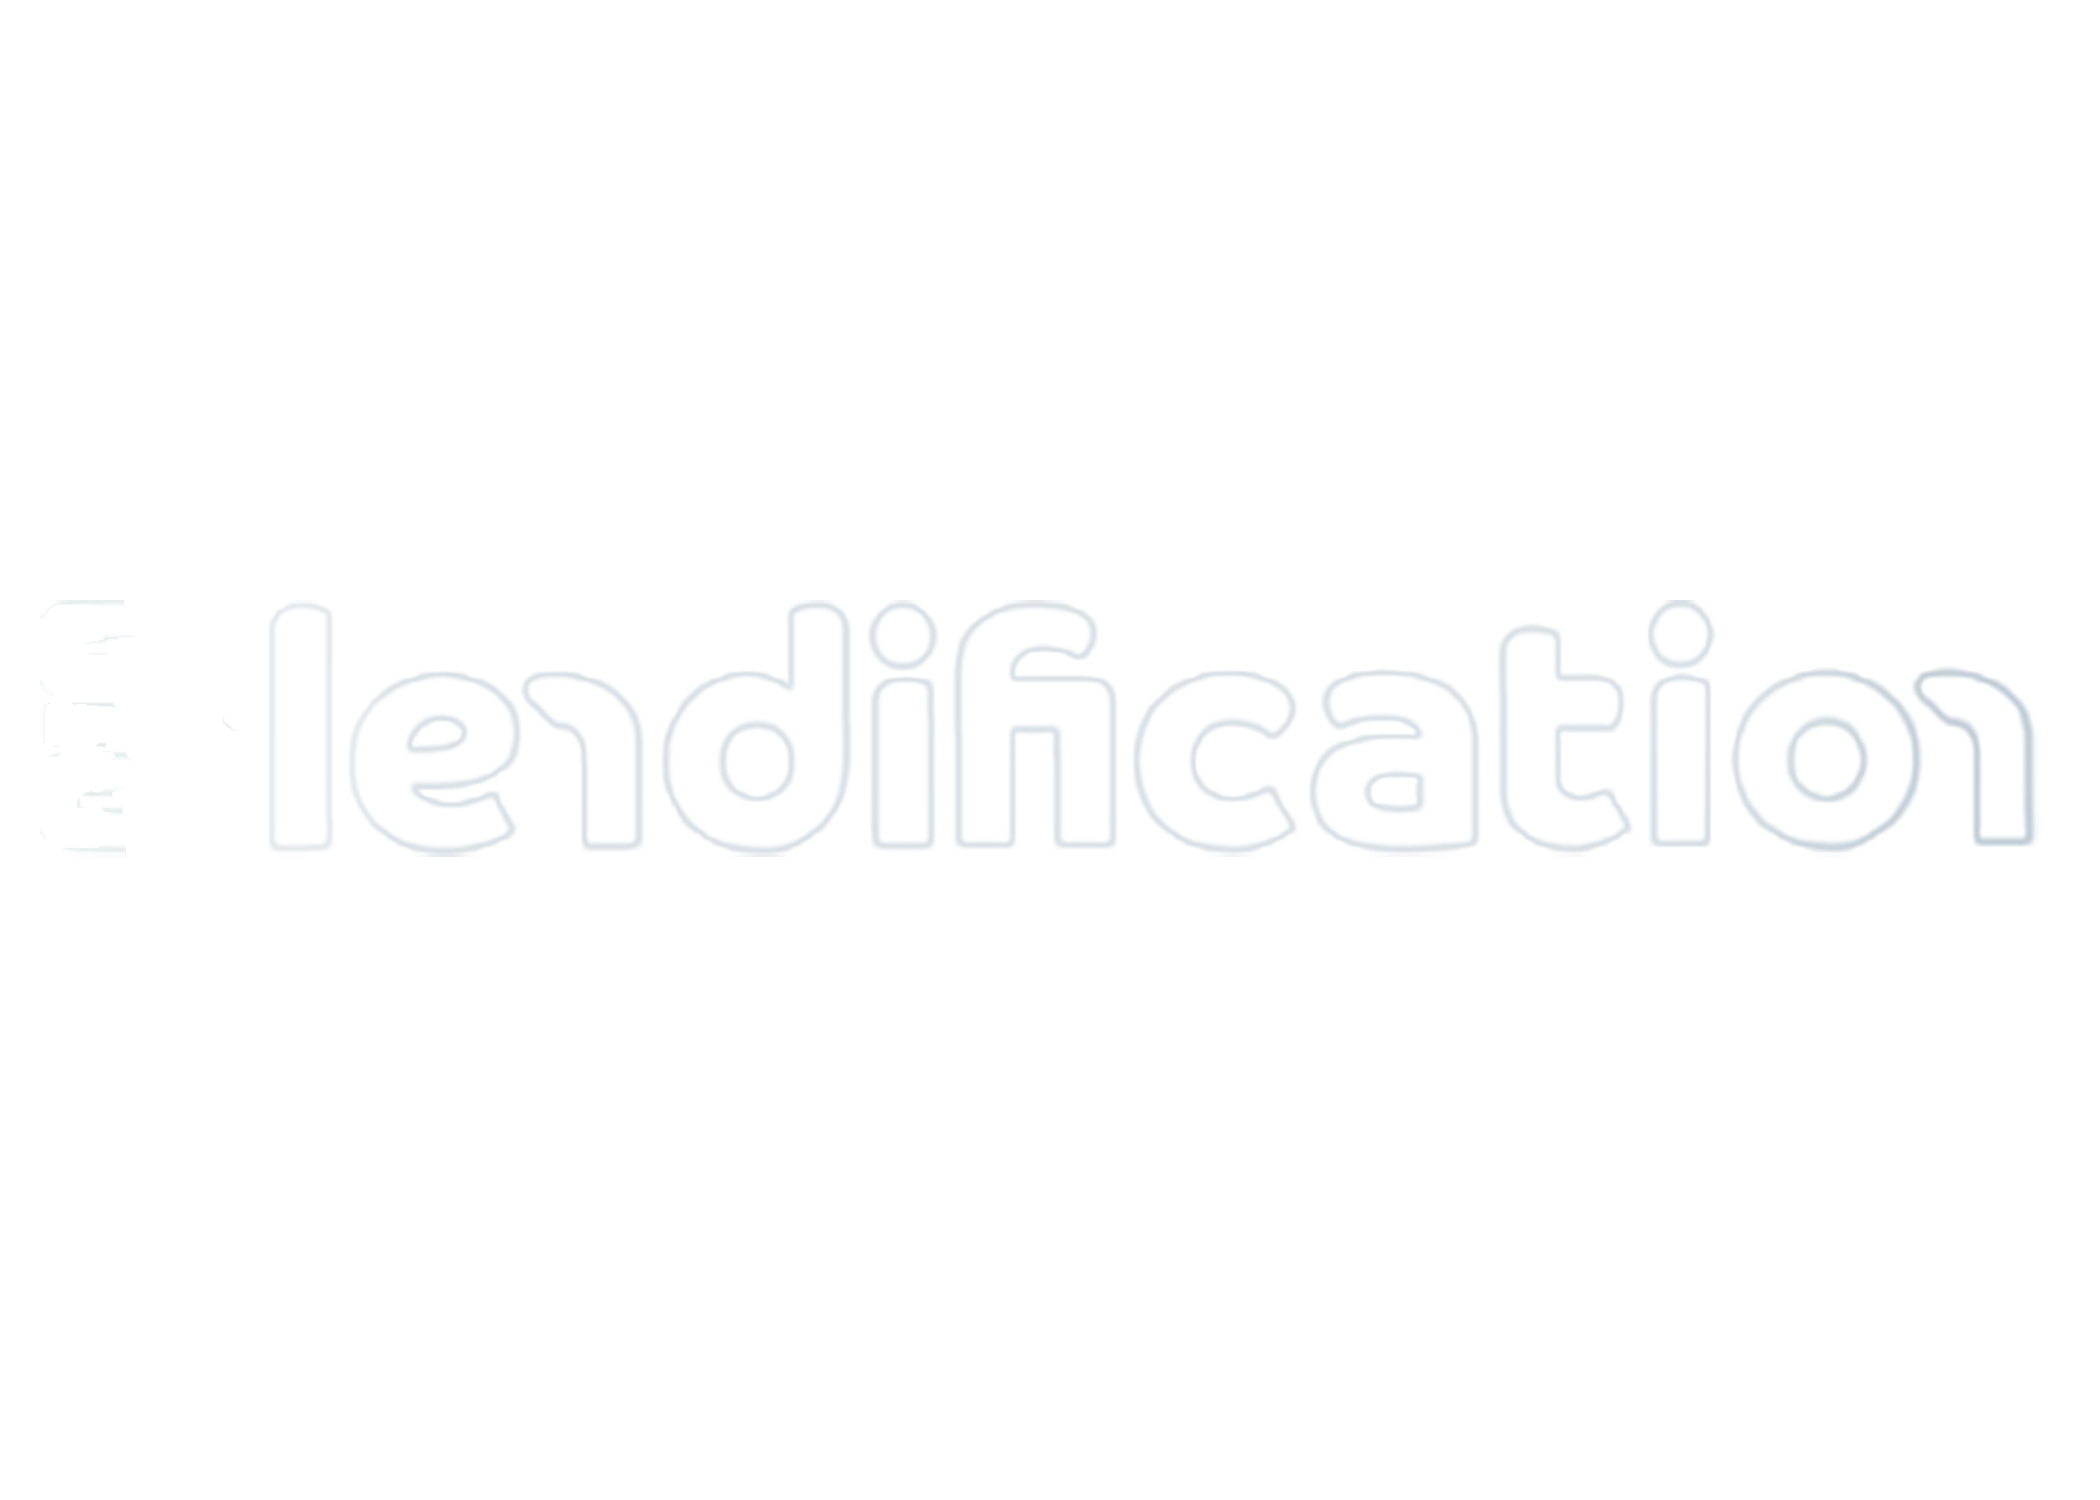 Blendification